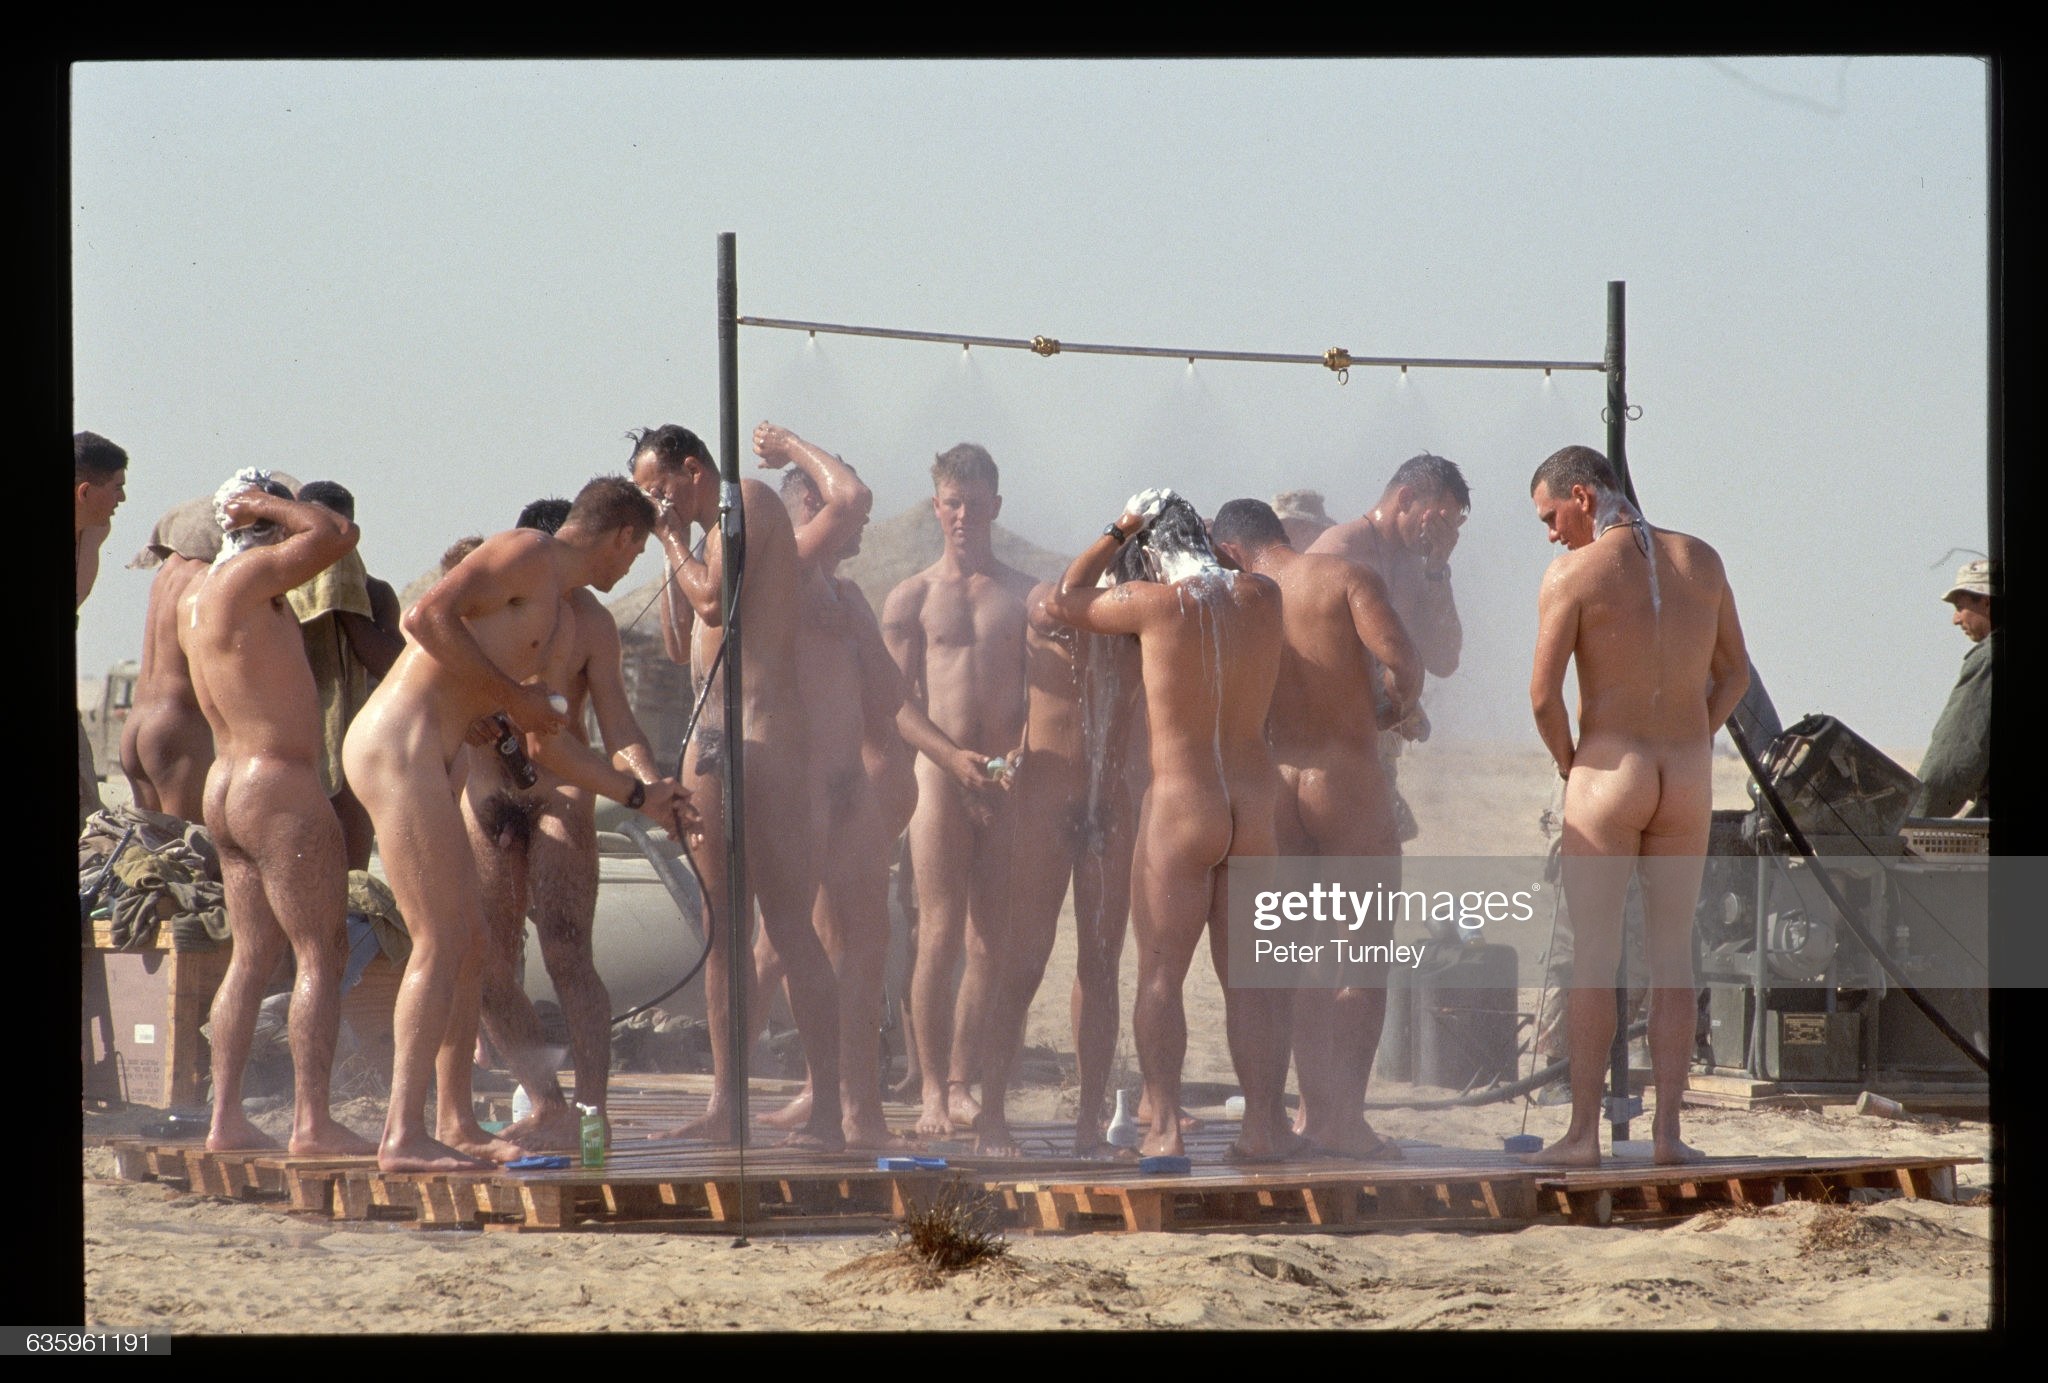 голые мужчины солдаты фото 40